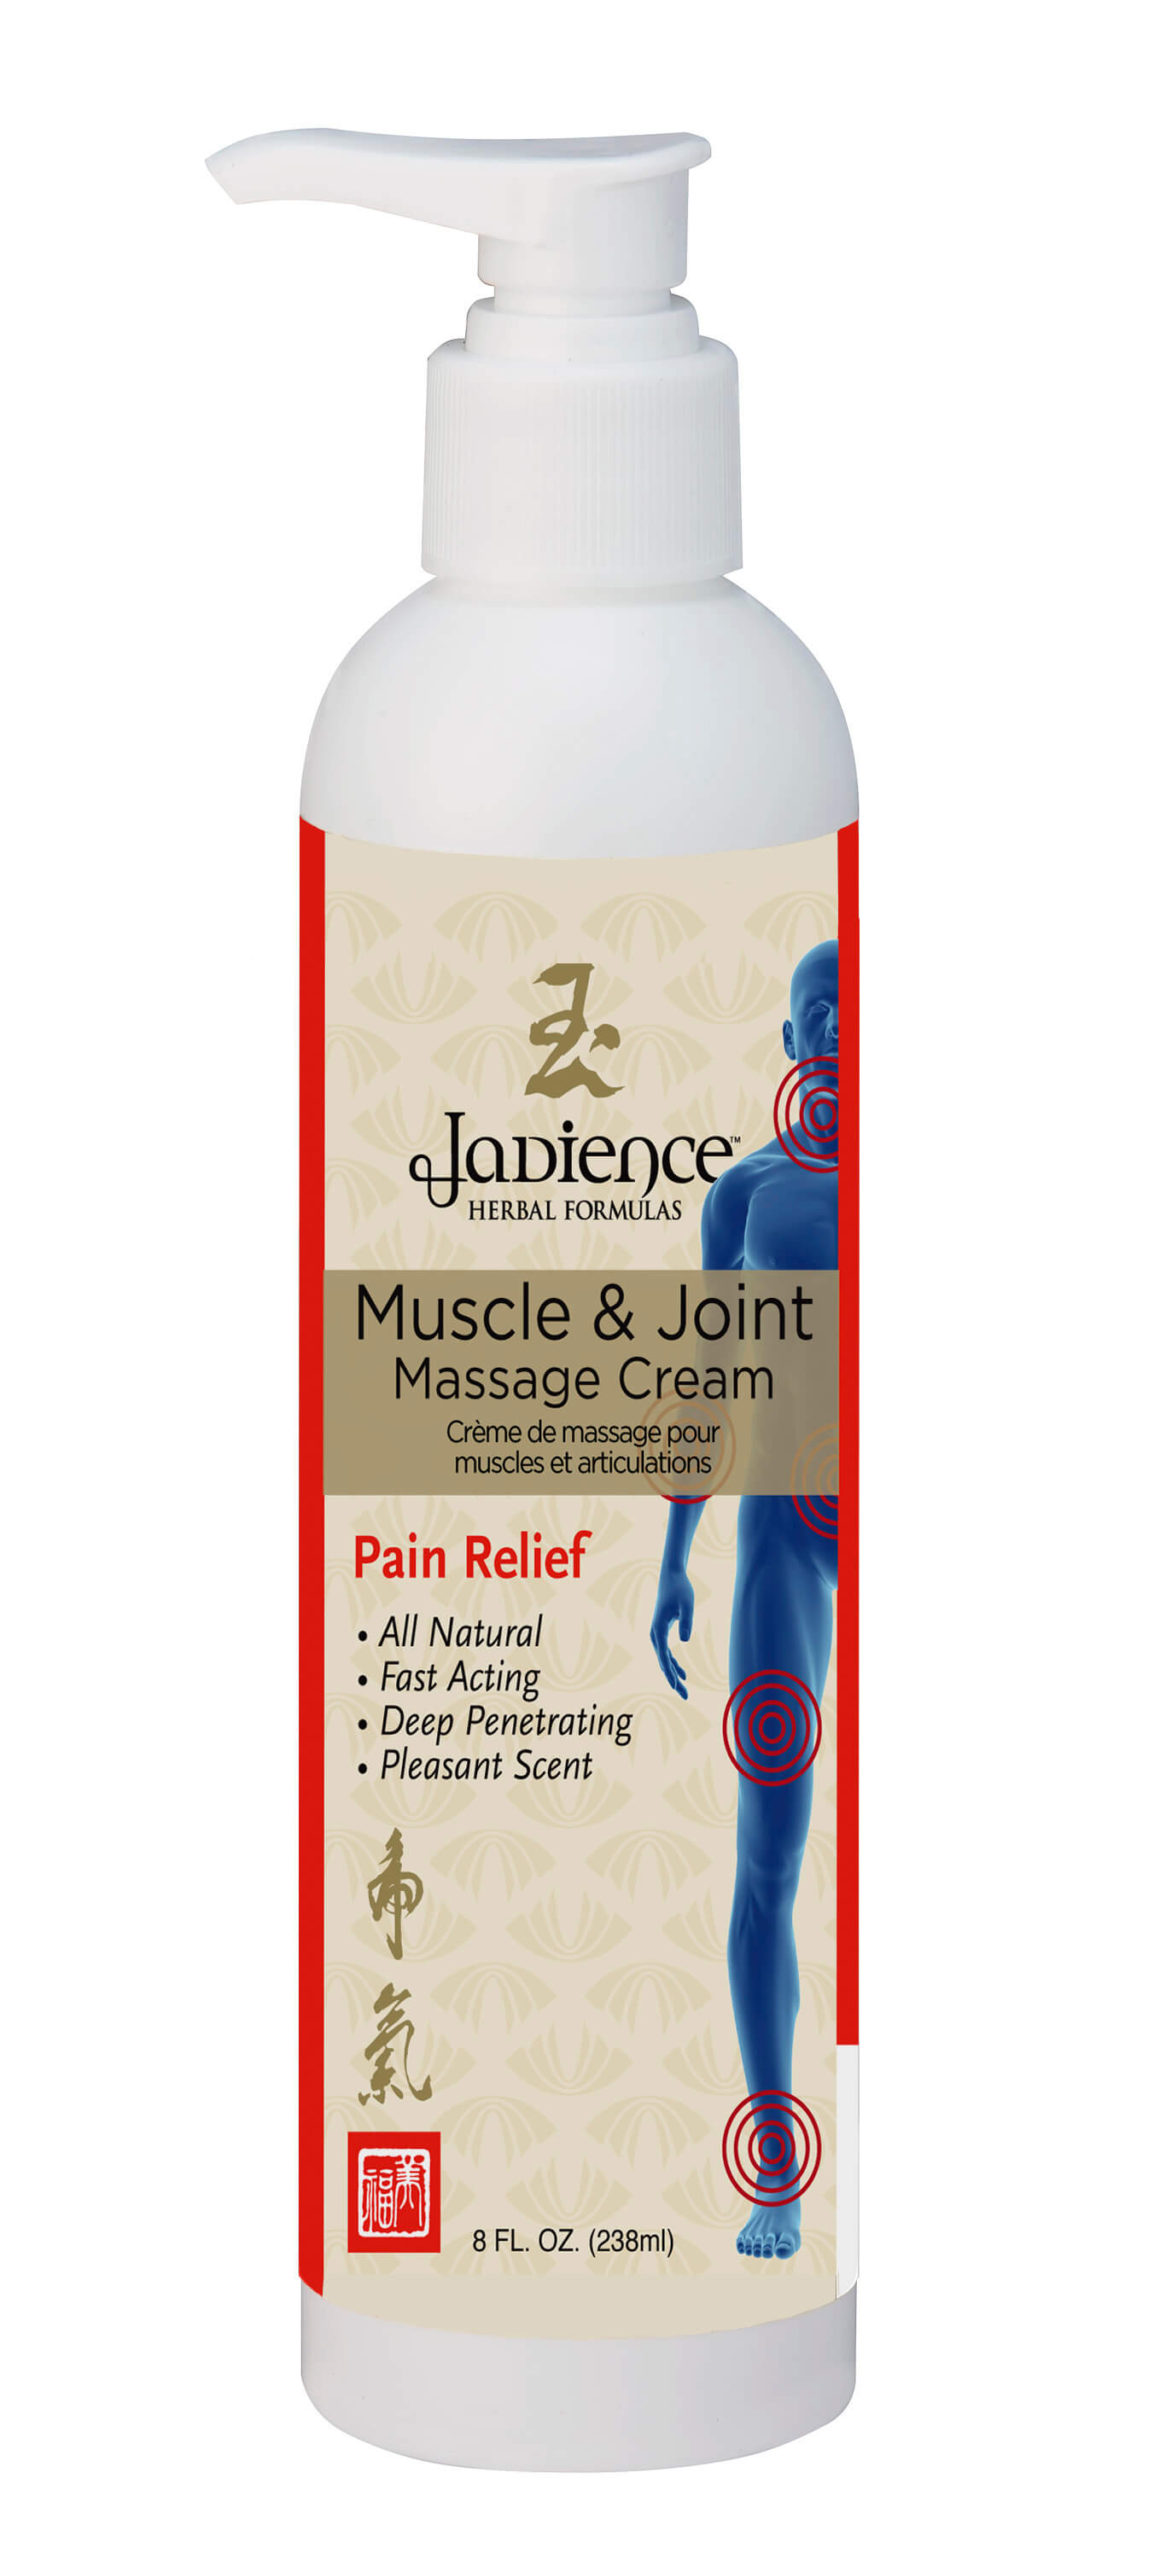 Muscle & Joint Massage Cream